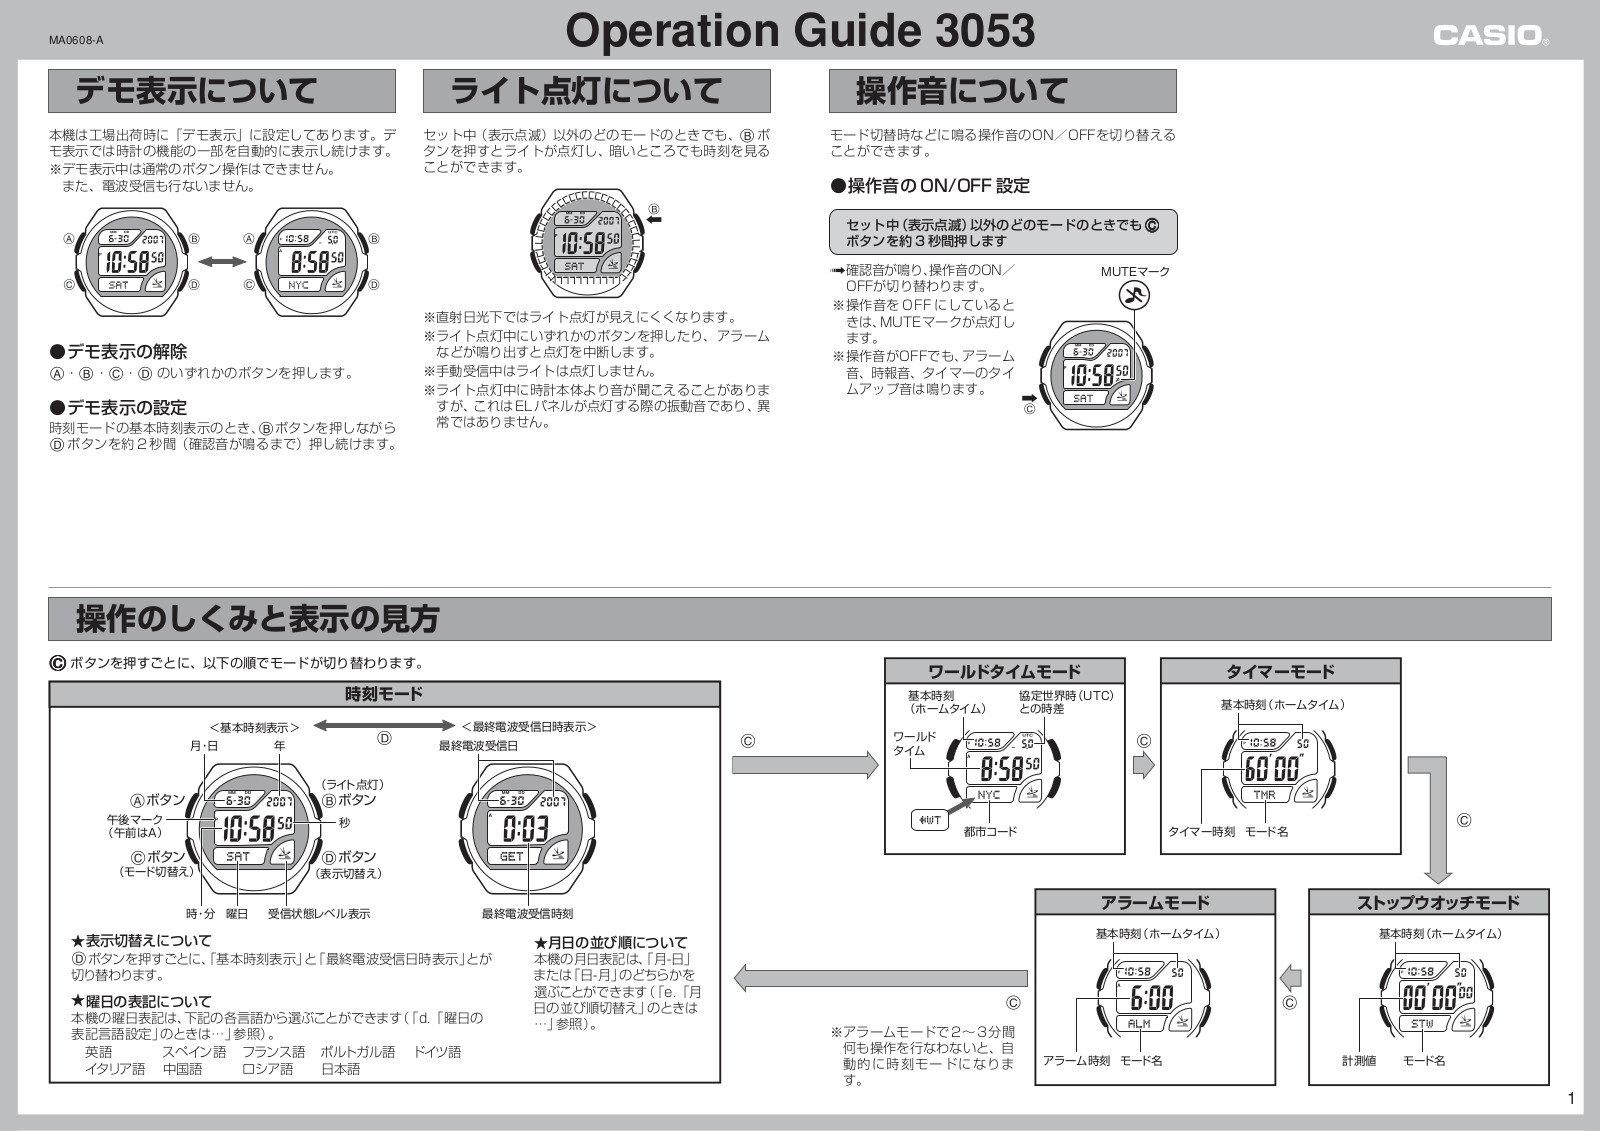 CASIO QW-3053 Operation Guide